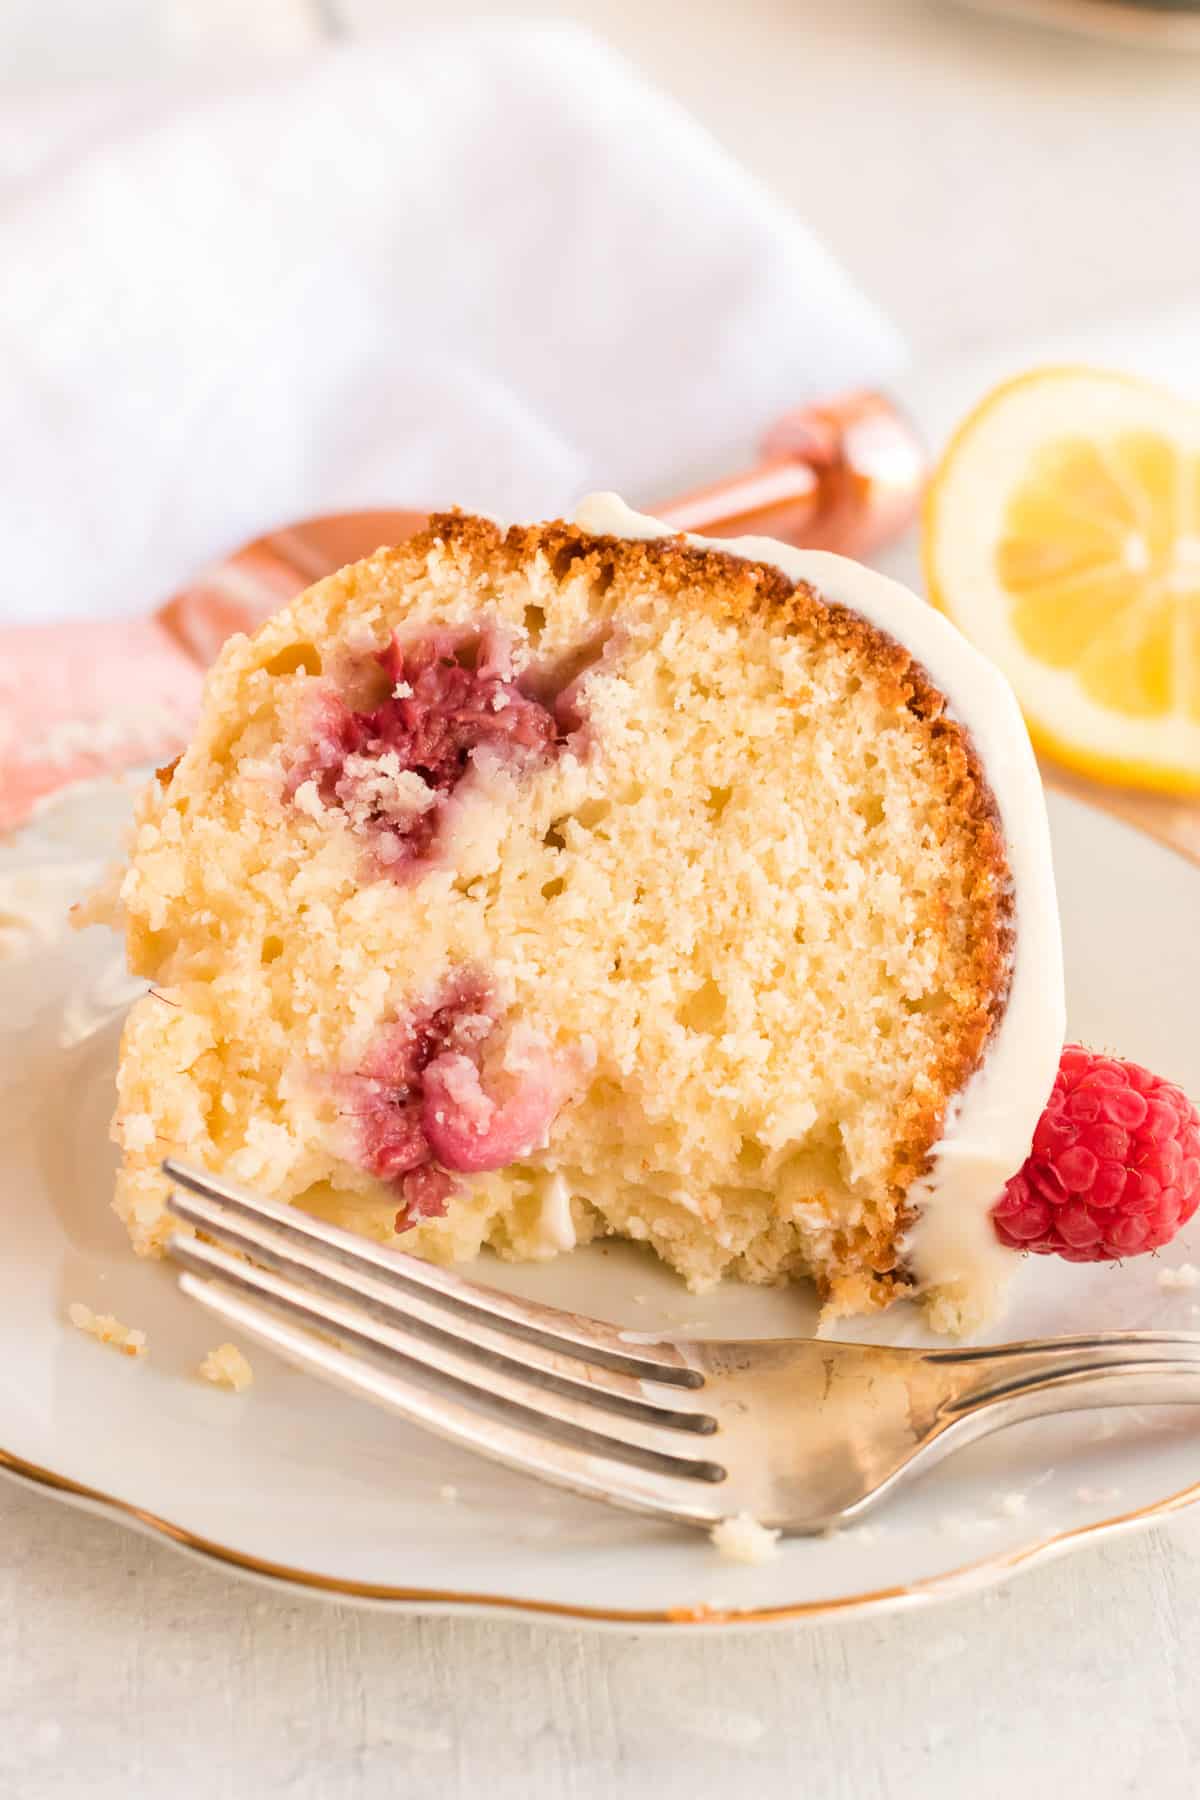 A slice of Lemon Raspberry Bundt Cake on a white plate with a fork.